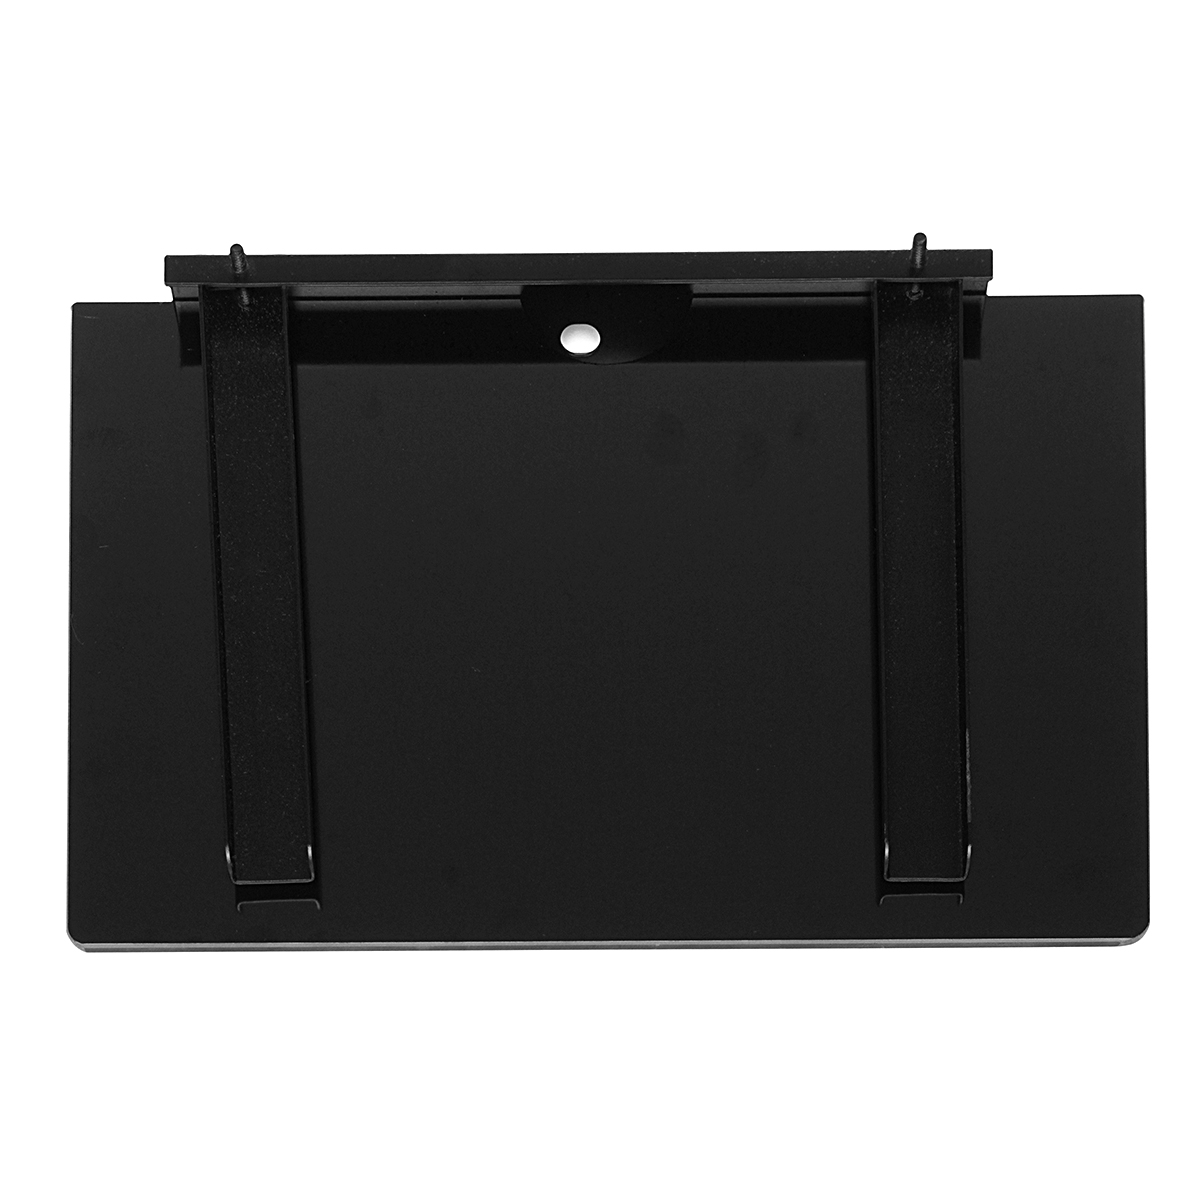 Black-Glass-Floating-Shelf-Wall-Mount-Bracket-TV-DVD-Player-Sky-Box-PS4-Console-1213971